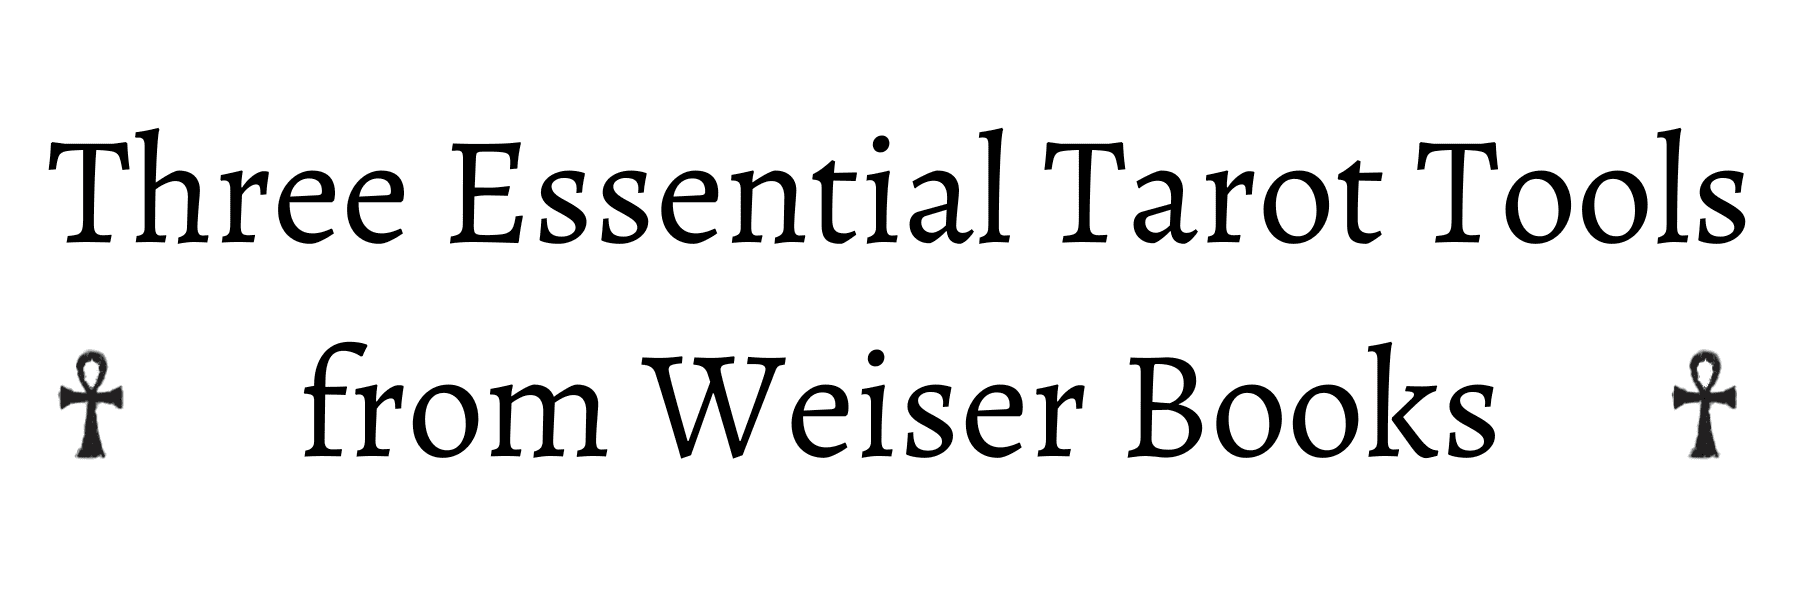 3 Essential Tarot tools from Weiser Books